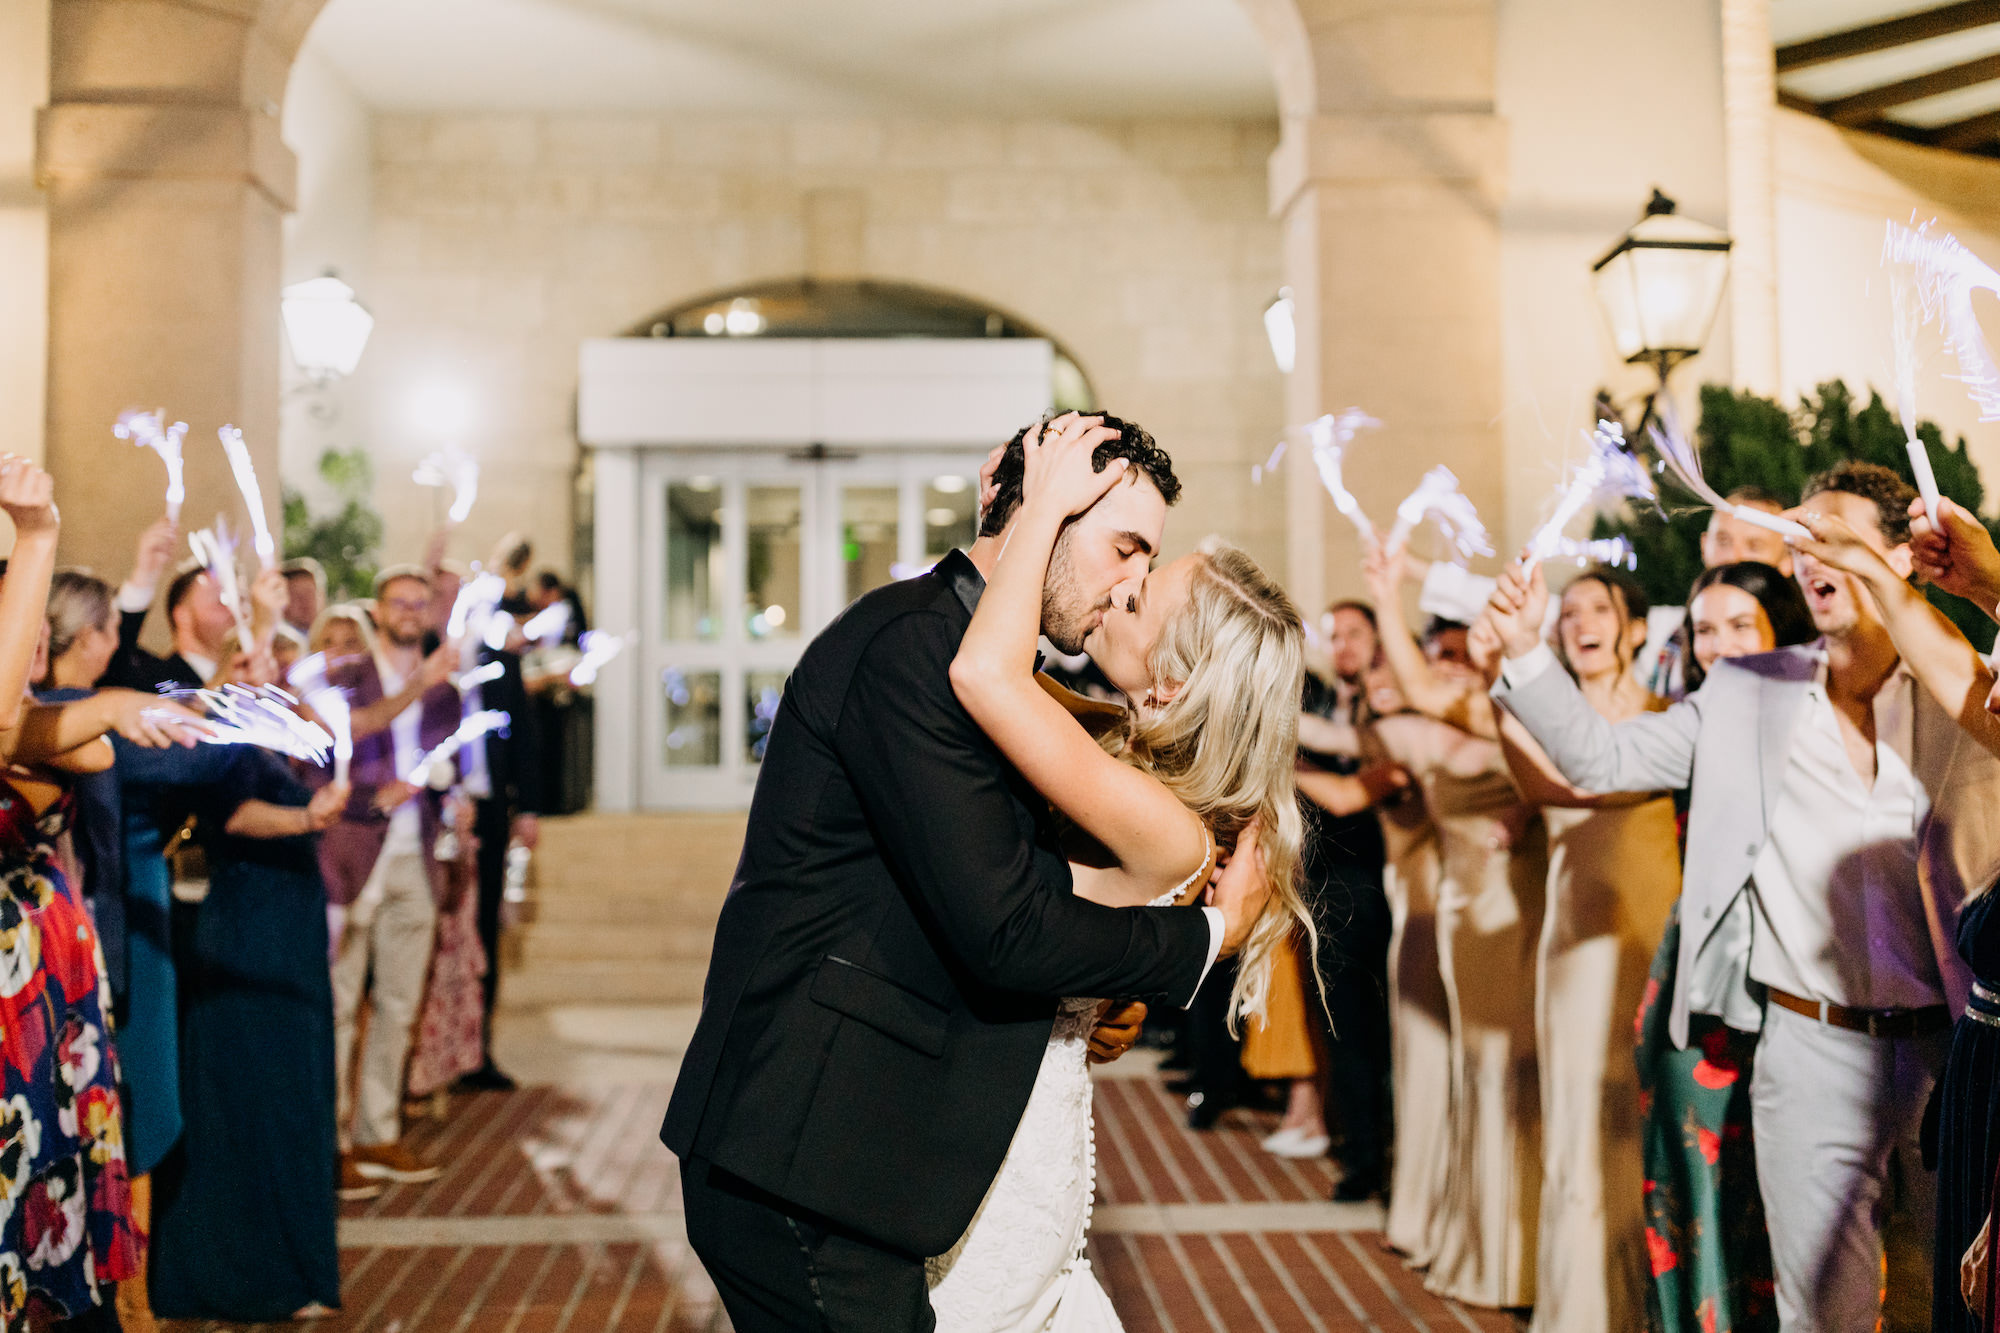 Unique Wedding Reception Fiber Optic Light-Up Wands Grand Exit Ideas | | St. Petersburg Wedding Photographer Amber McWhorter Photography | Planner Wilder Mind Events | Videographer J&S Media